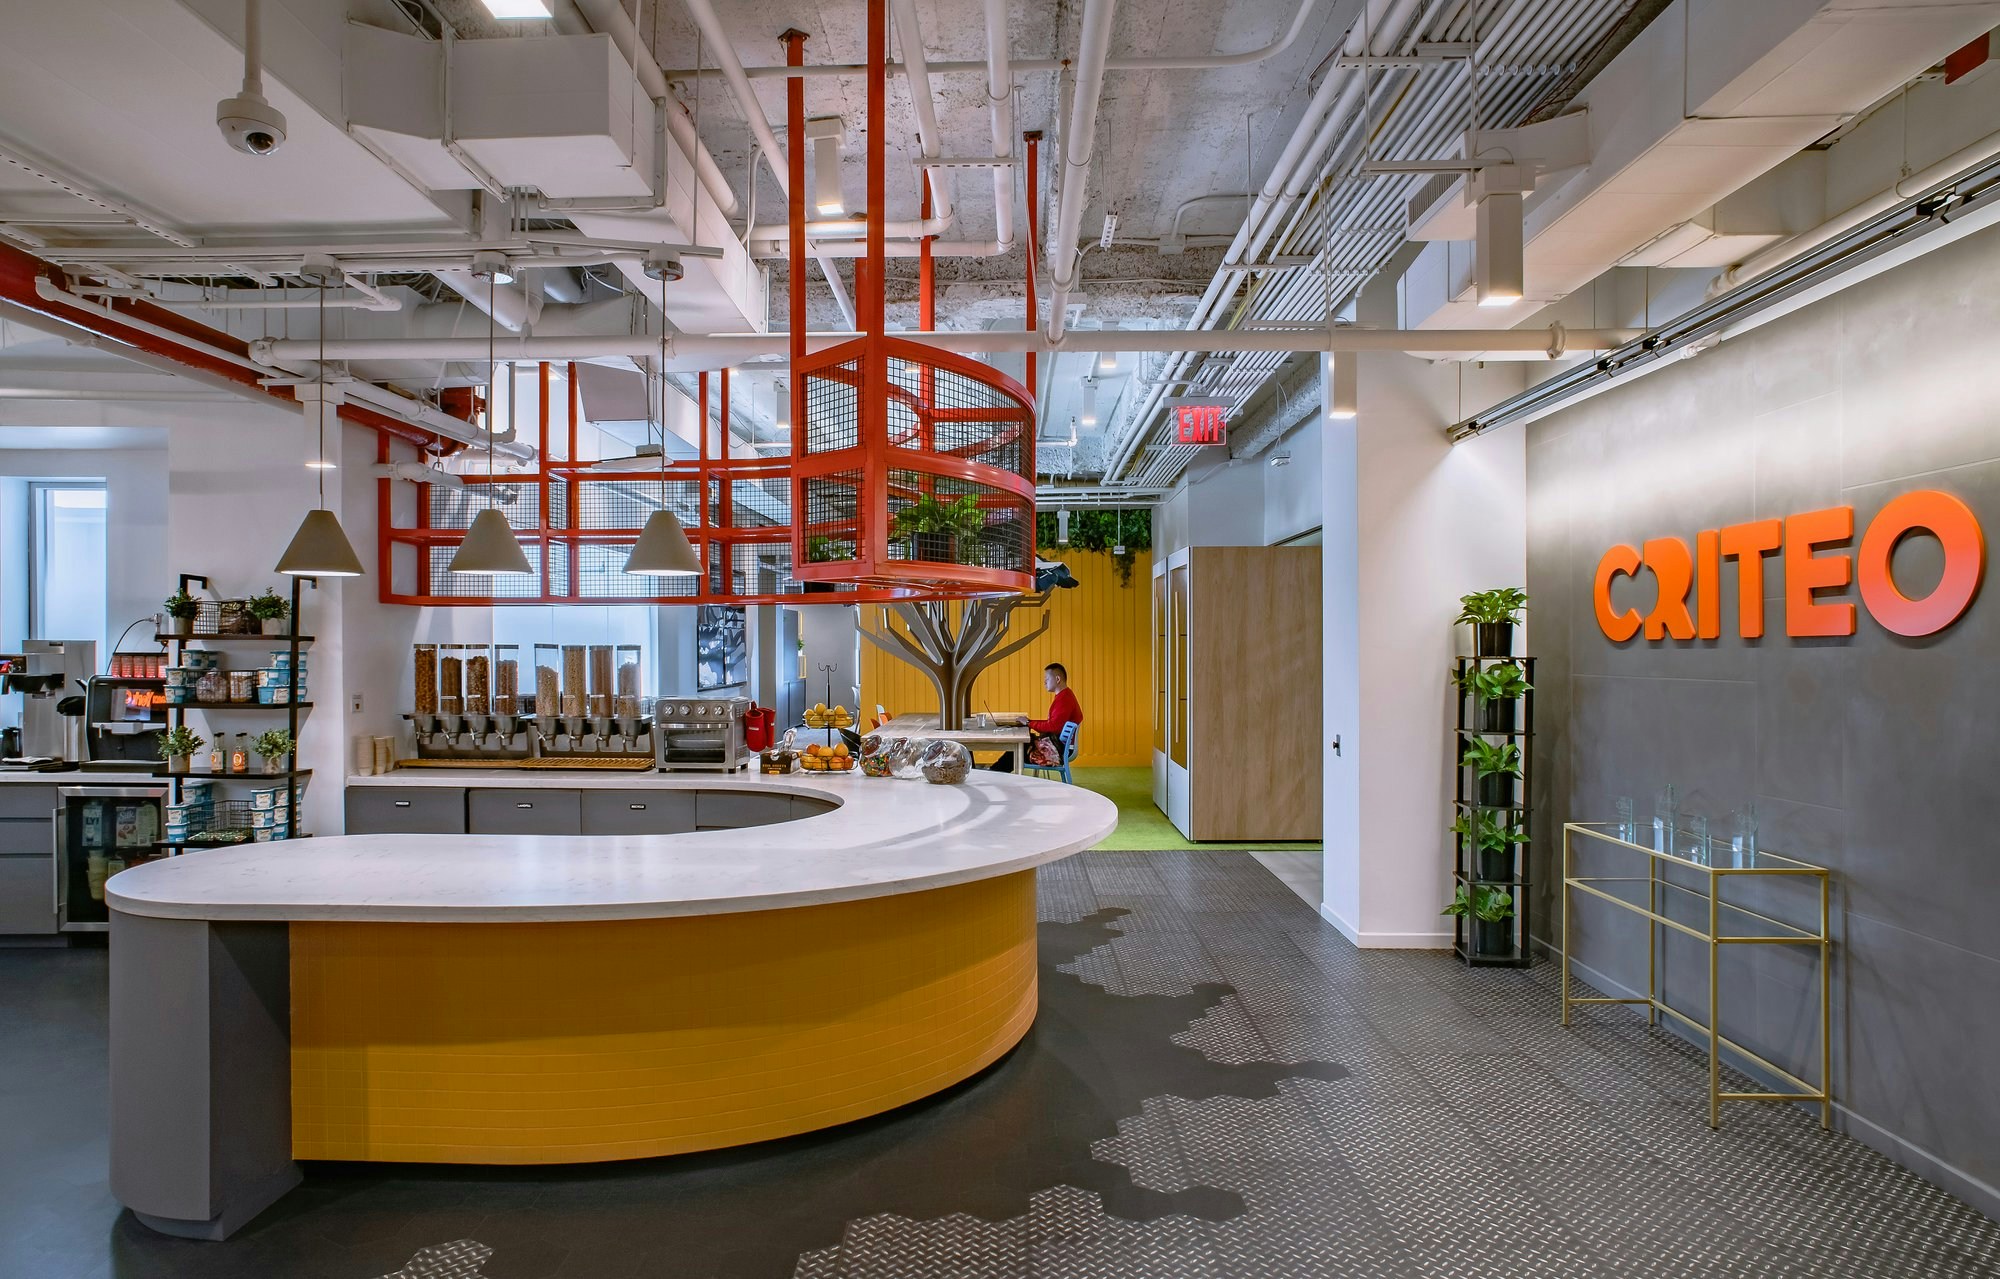 Criteo New York Office Design - Reception